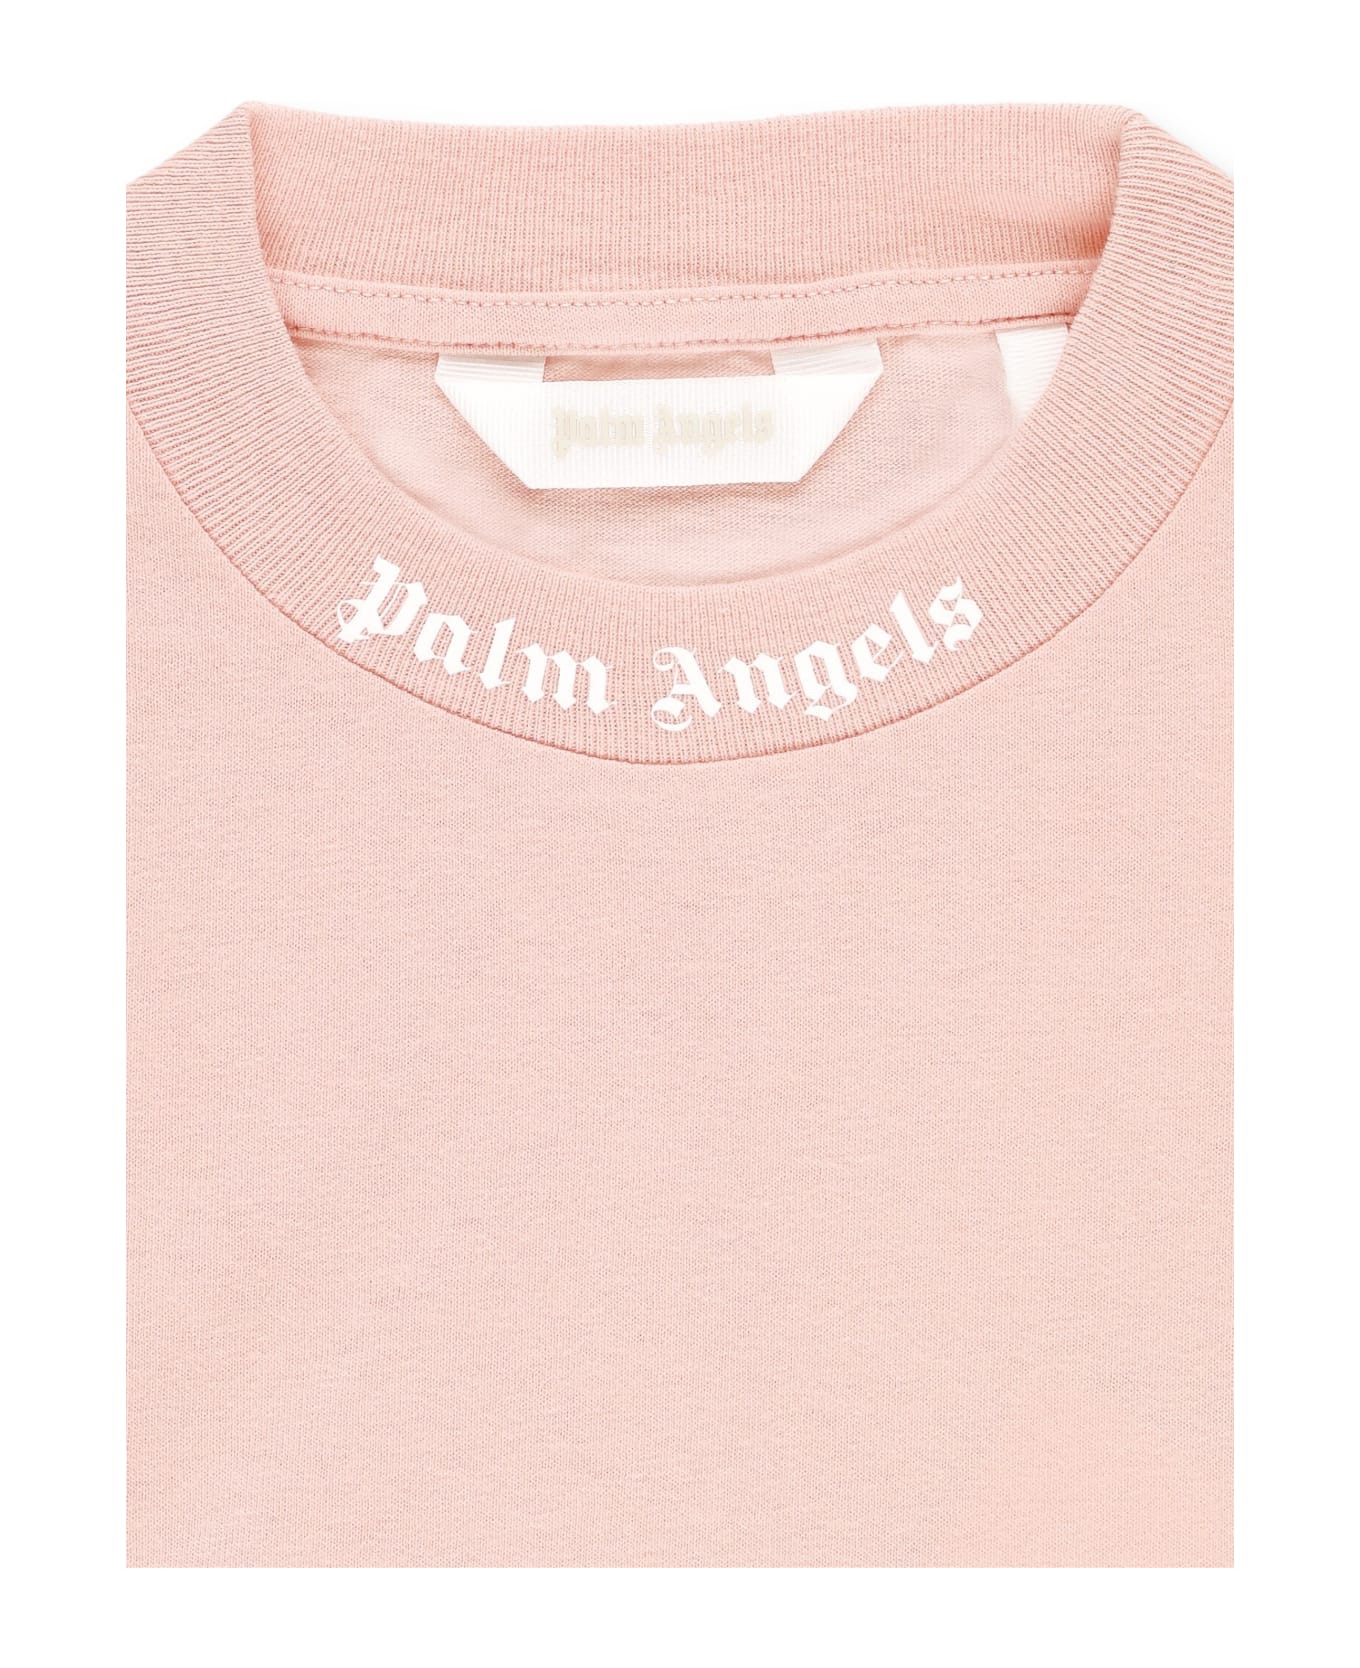 Palm Angels Overlogo T-shirt - Pink